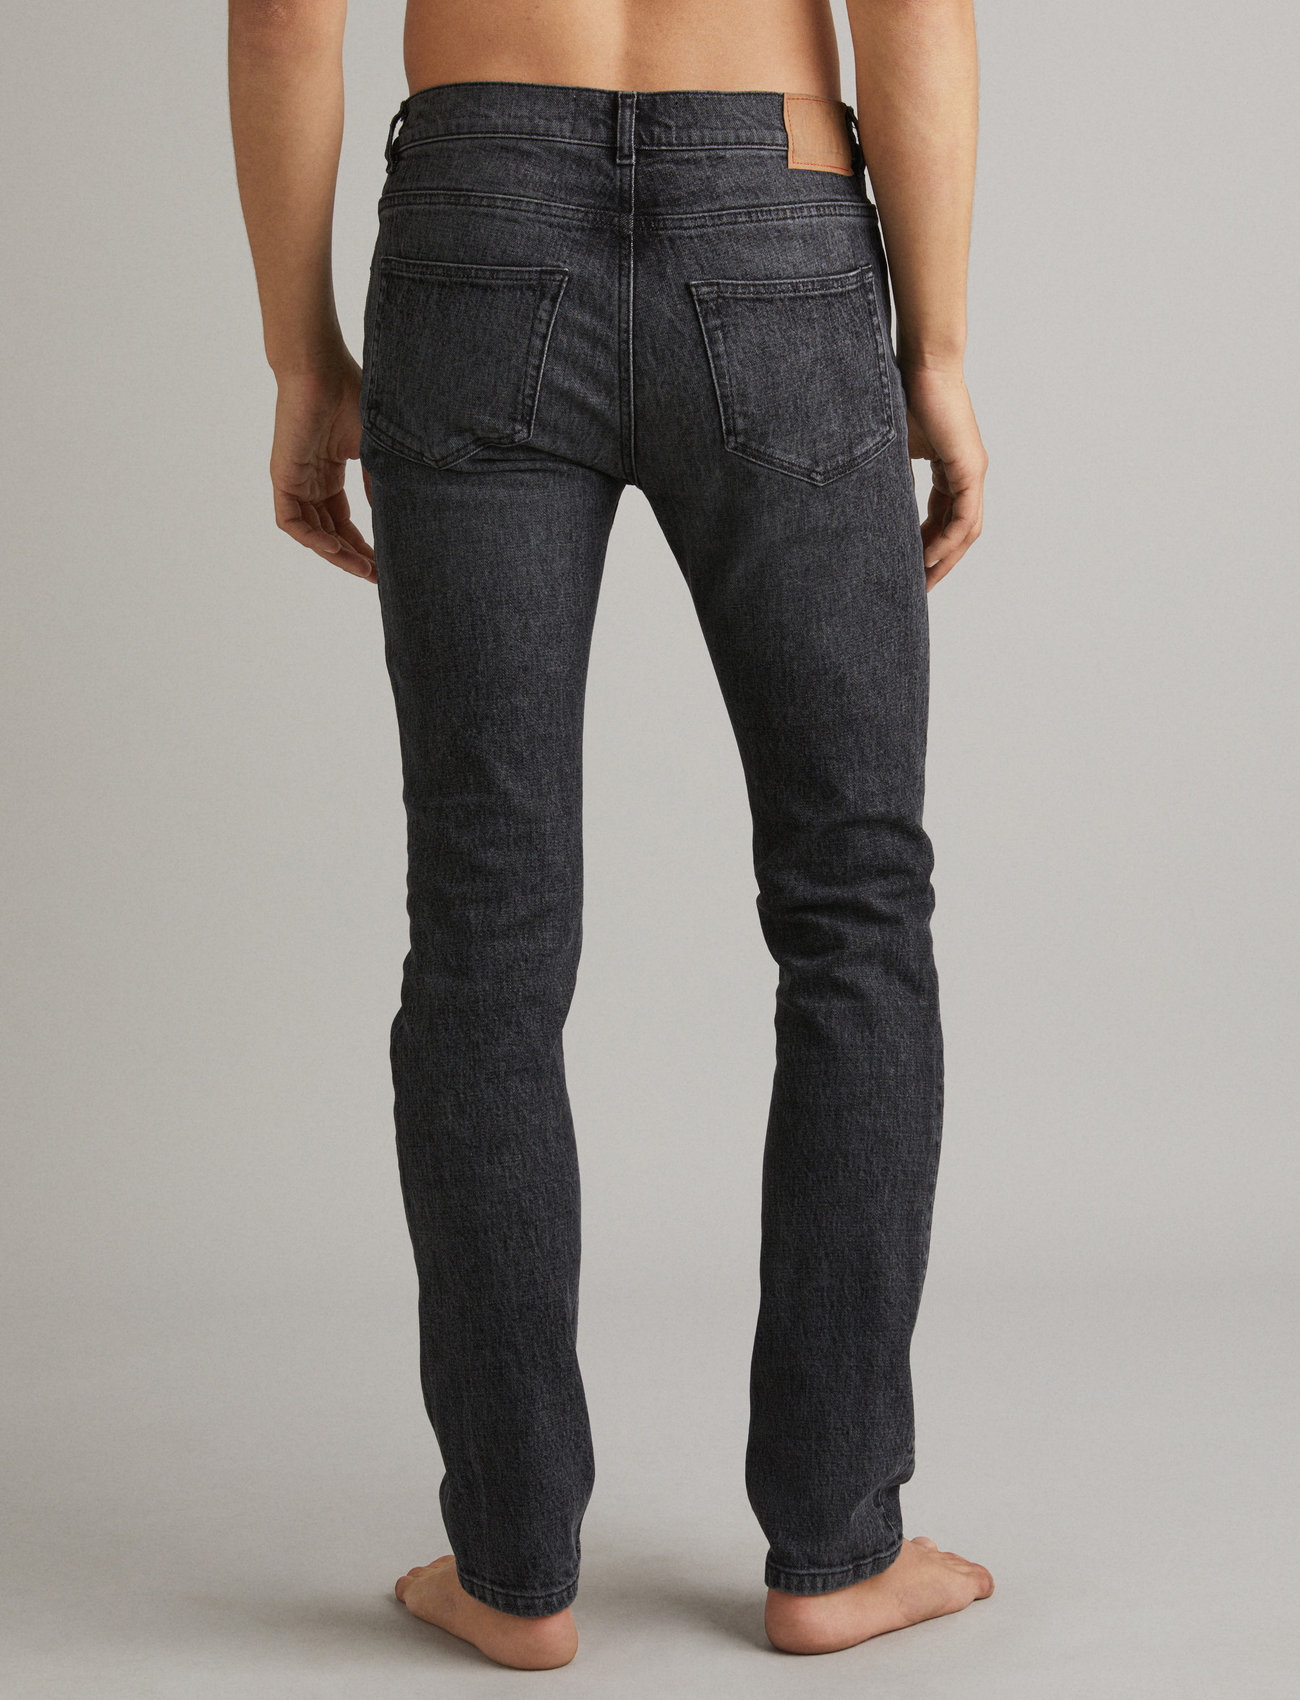 Jeanerica - SM001 Slim Jeans - chemises basiques - blackvintage82 - 4